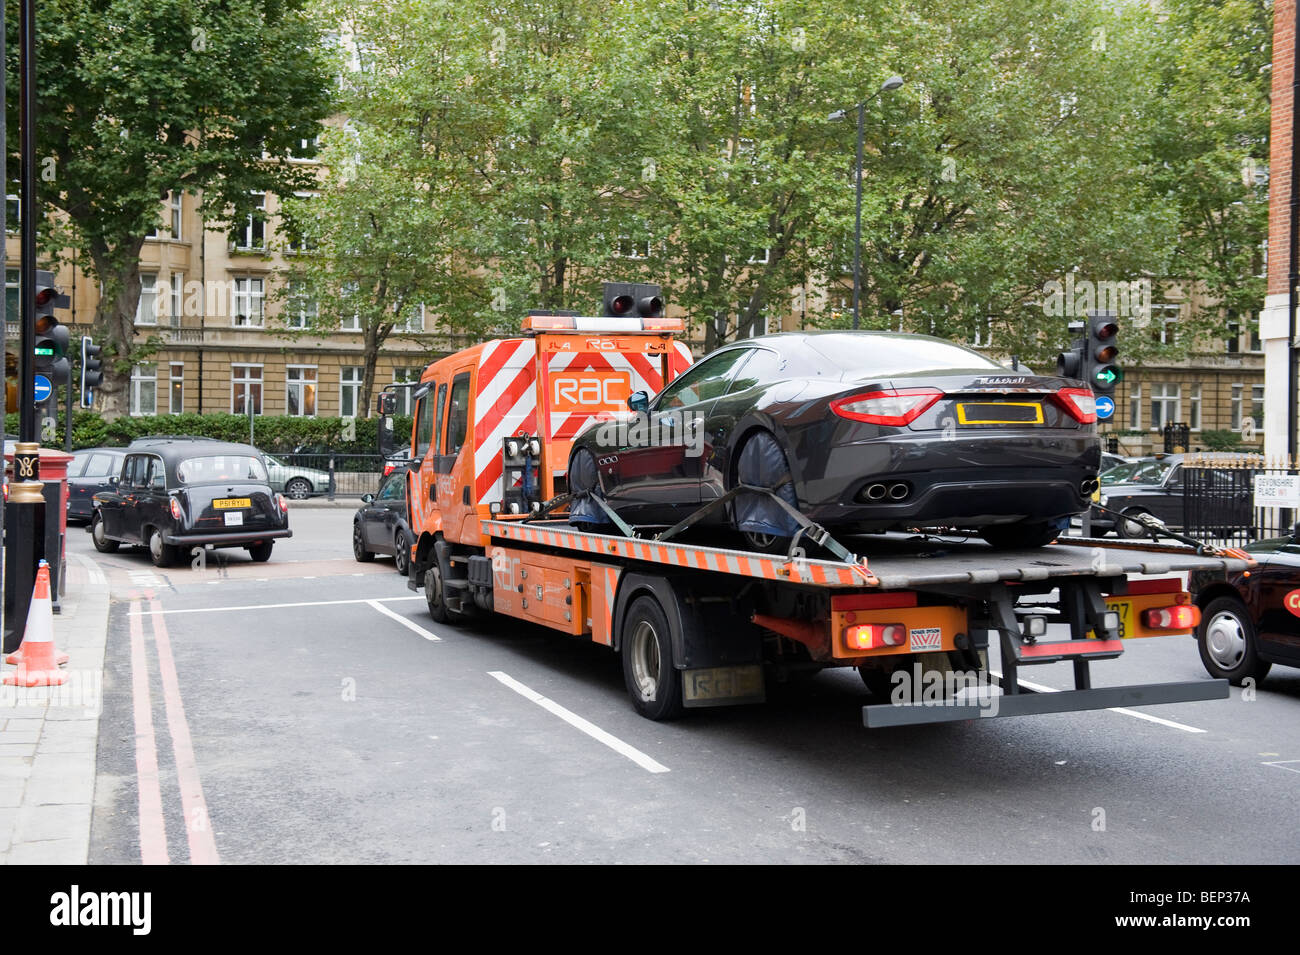 MASERATI SPORTS CAR ON A BREAKDOWN TRUCK, CENTRAL LONDON. Stock Photo